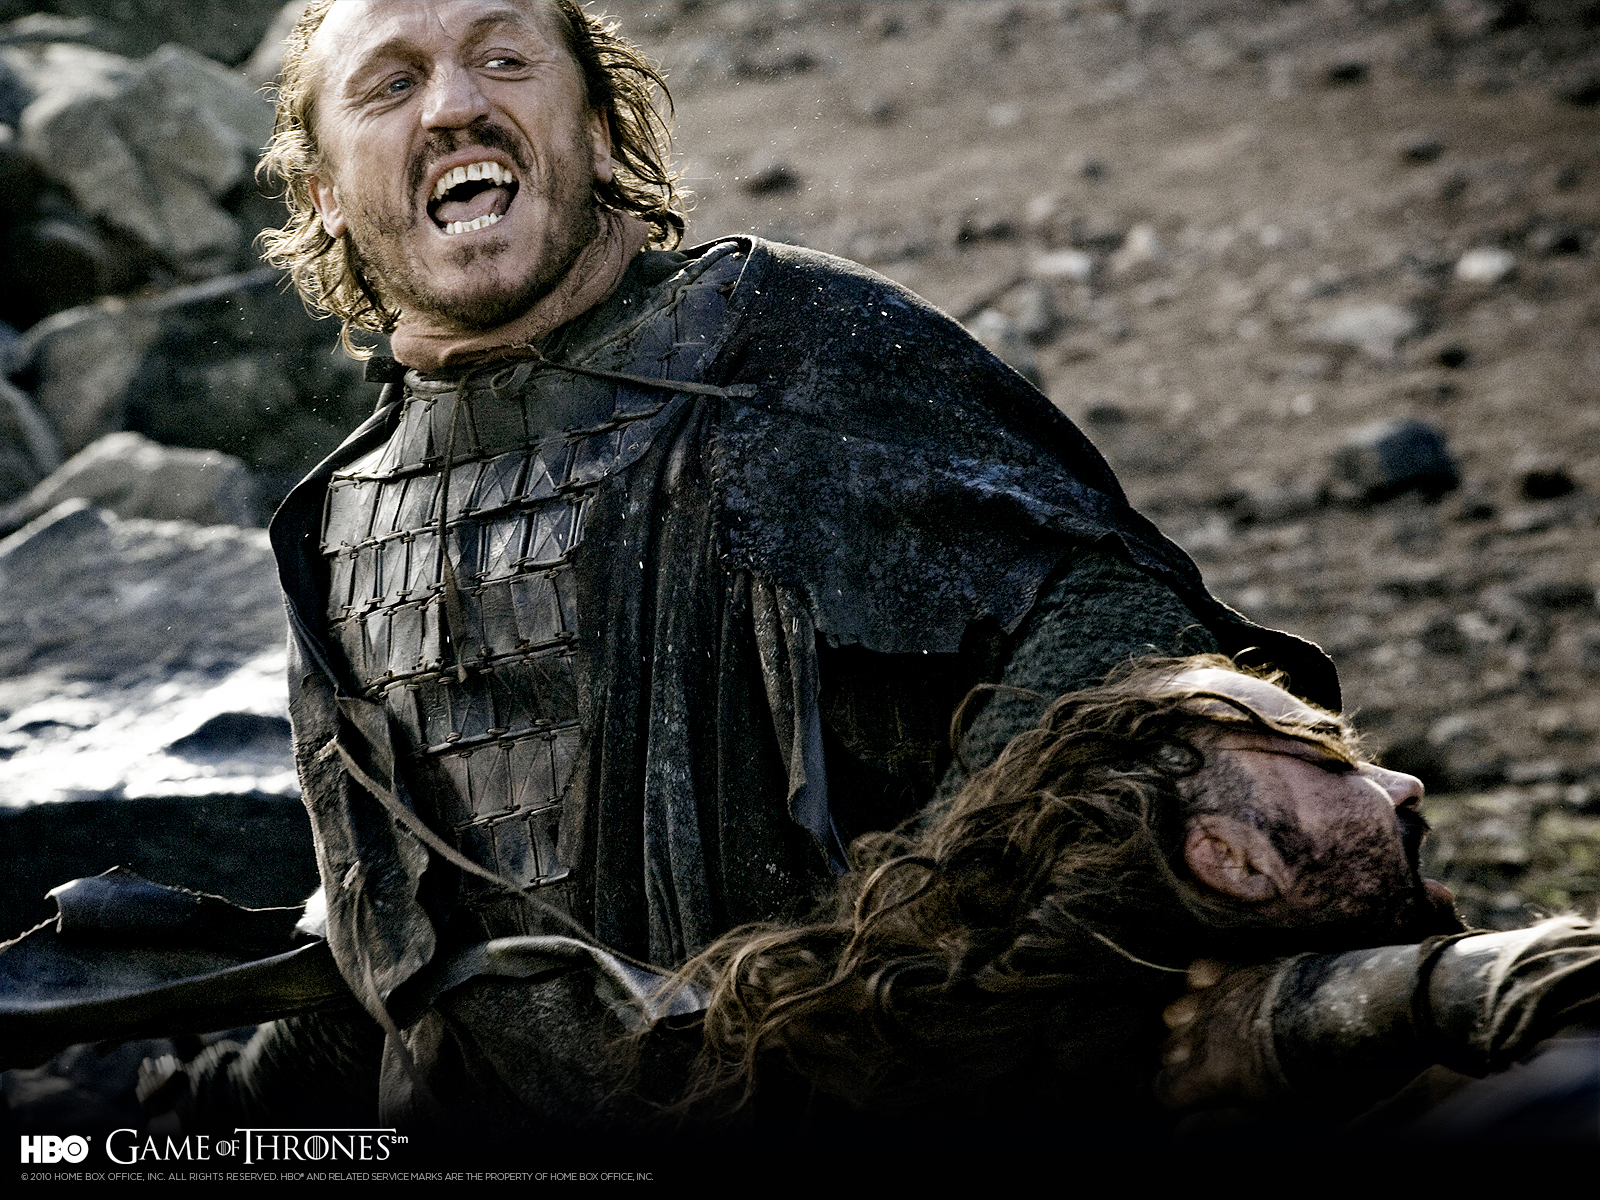 Jerome Flynn as Bronn in Game of Thrones desktop wallpaper.